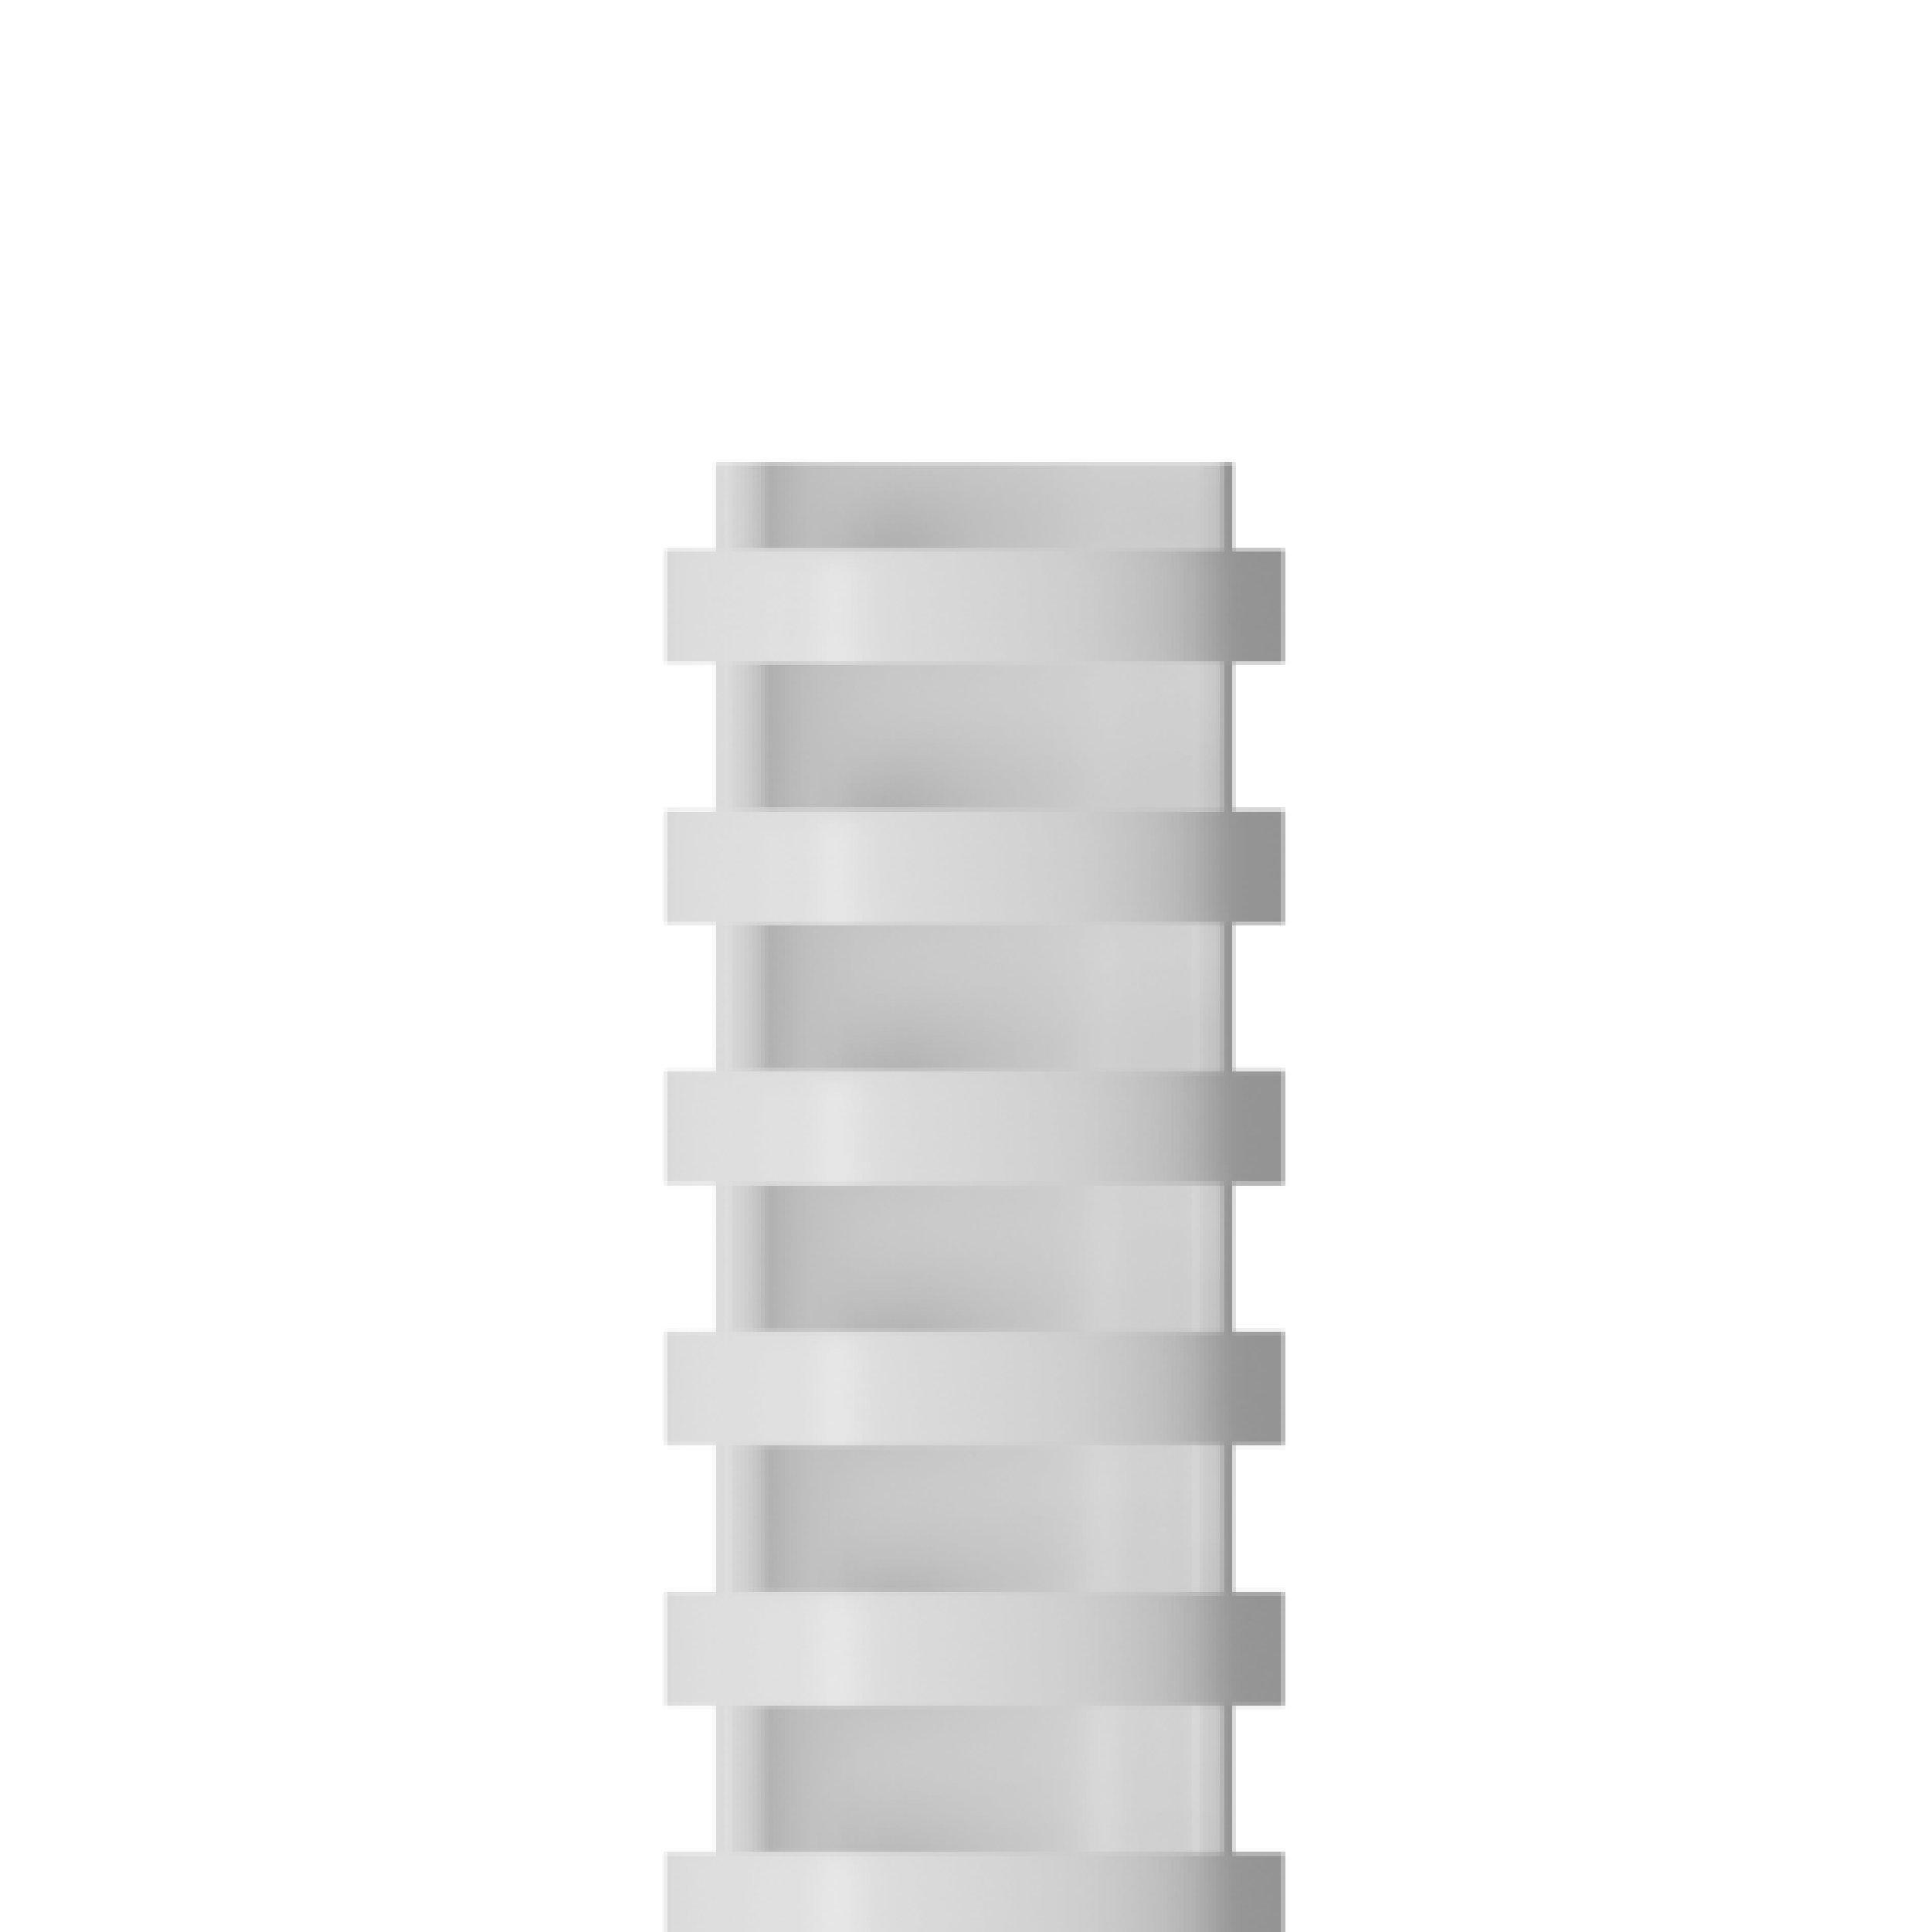 RAADO 32mm Plastic Spiral Binding Comb, White